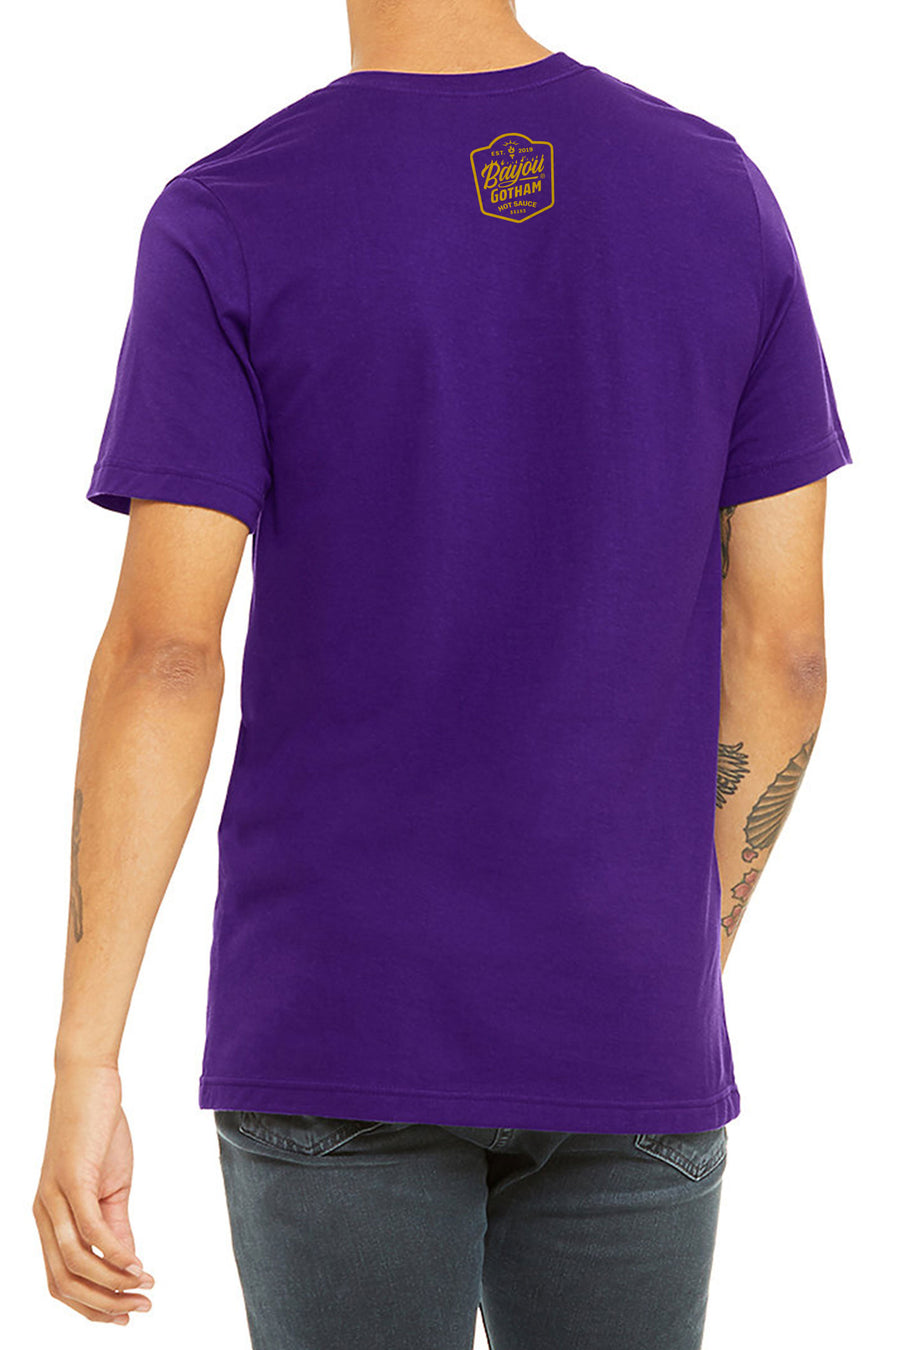 Bayou Gotham Purple and Gold Fleur de Lis T-Shirt